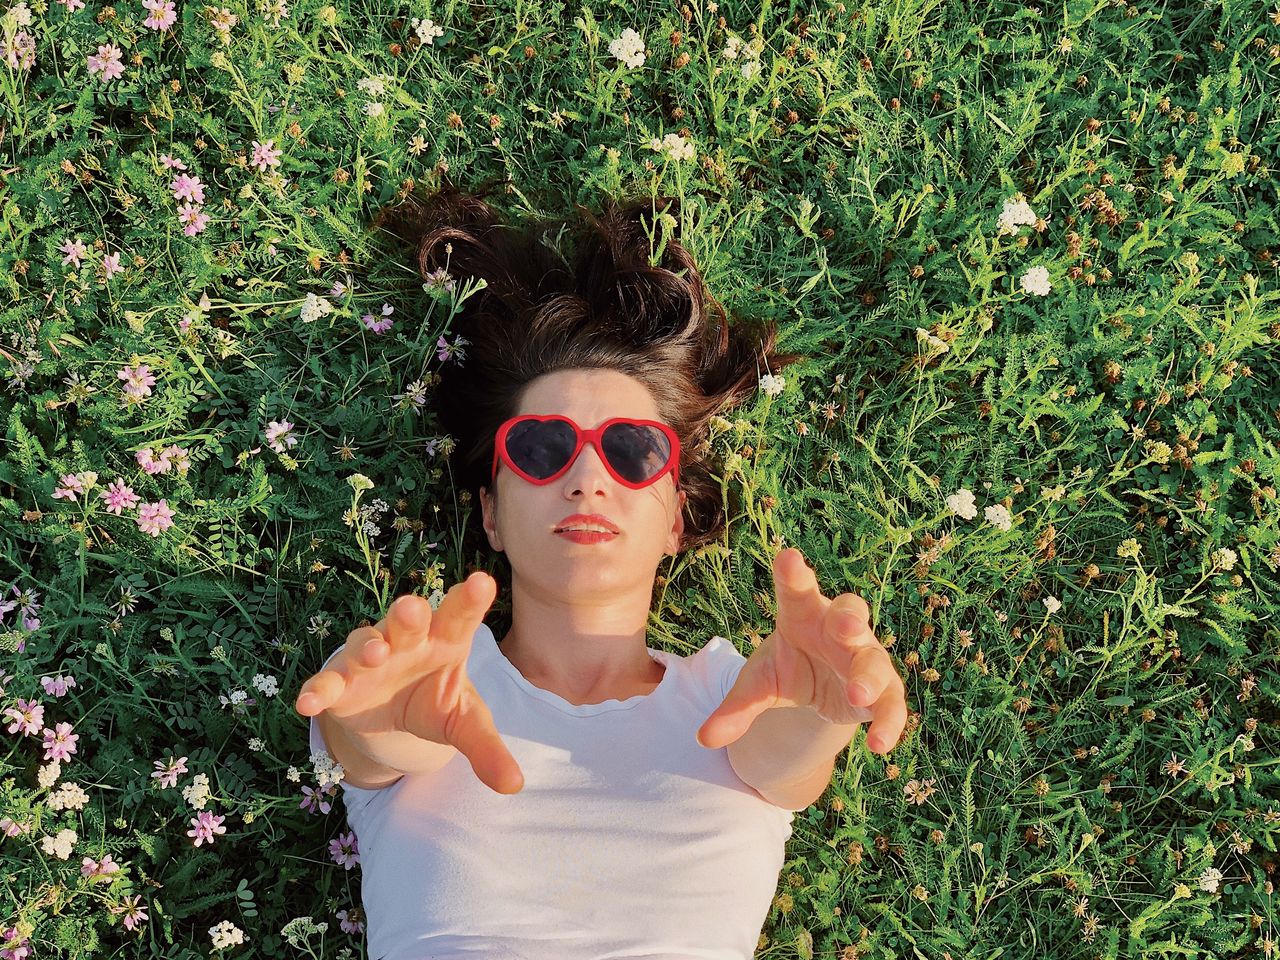 Portrait of woman wearing sunglasses lying on grassy land